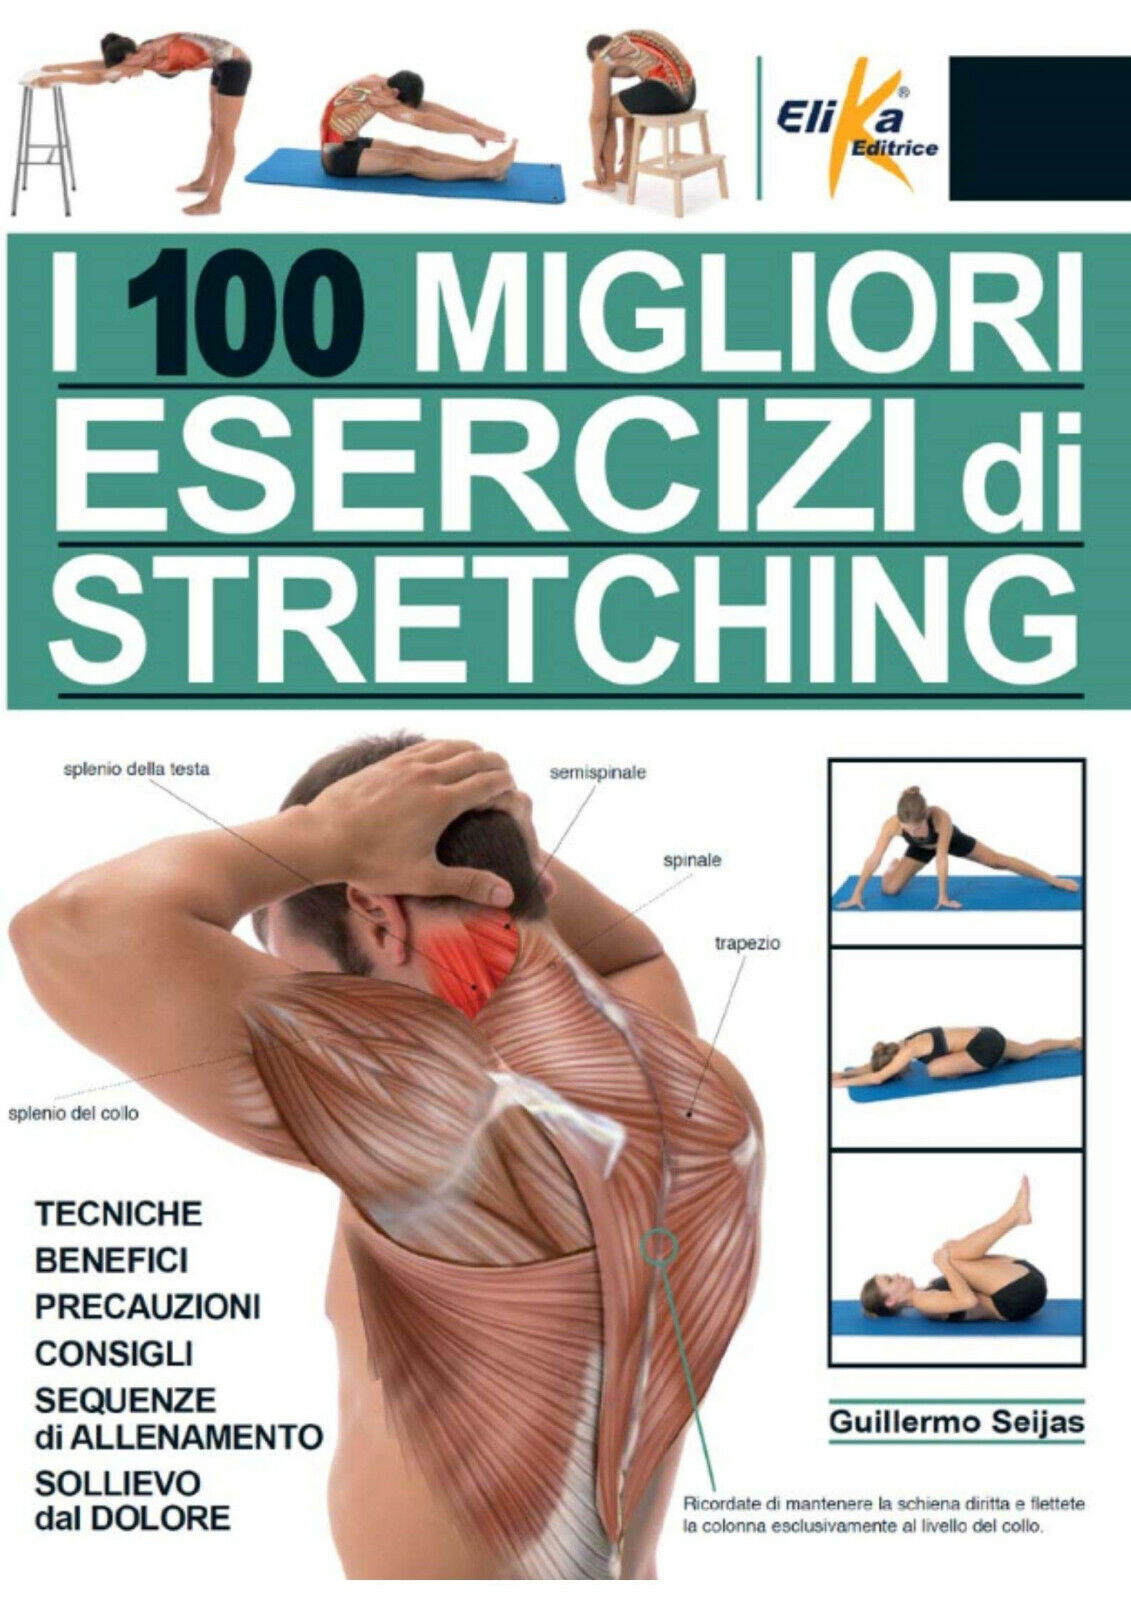 I 100 migliori esercizi di stretching - Guillermo Seijas - Elika, 2015